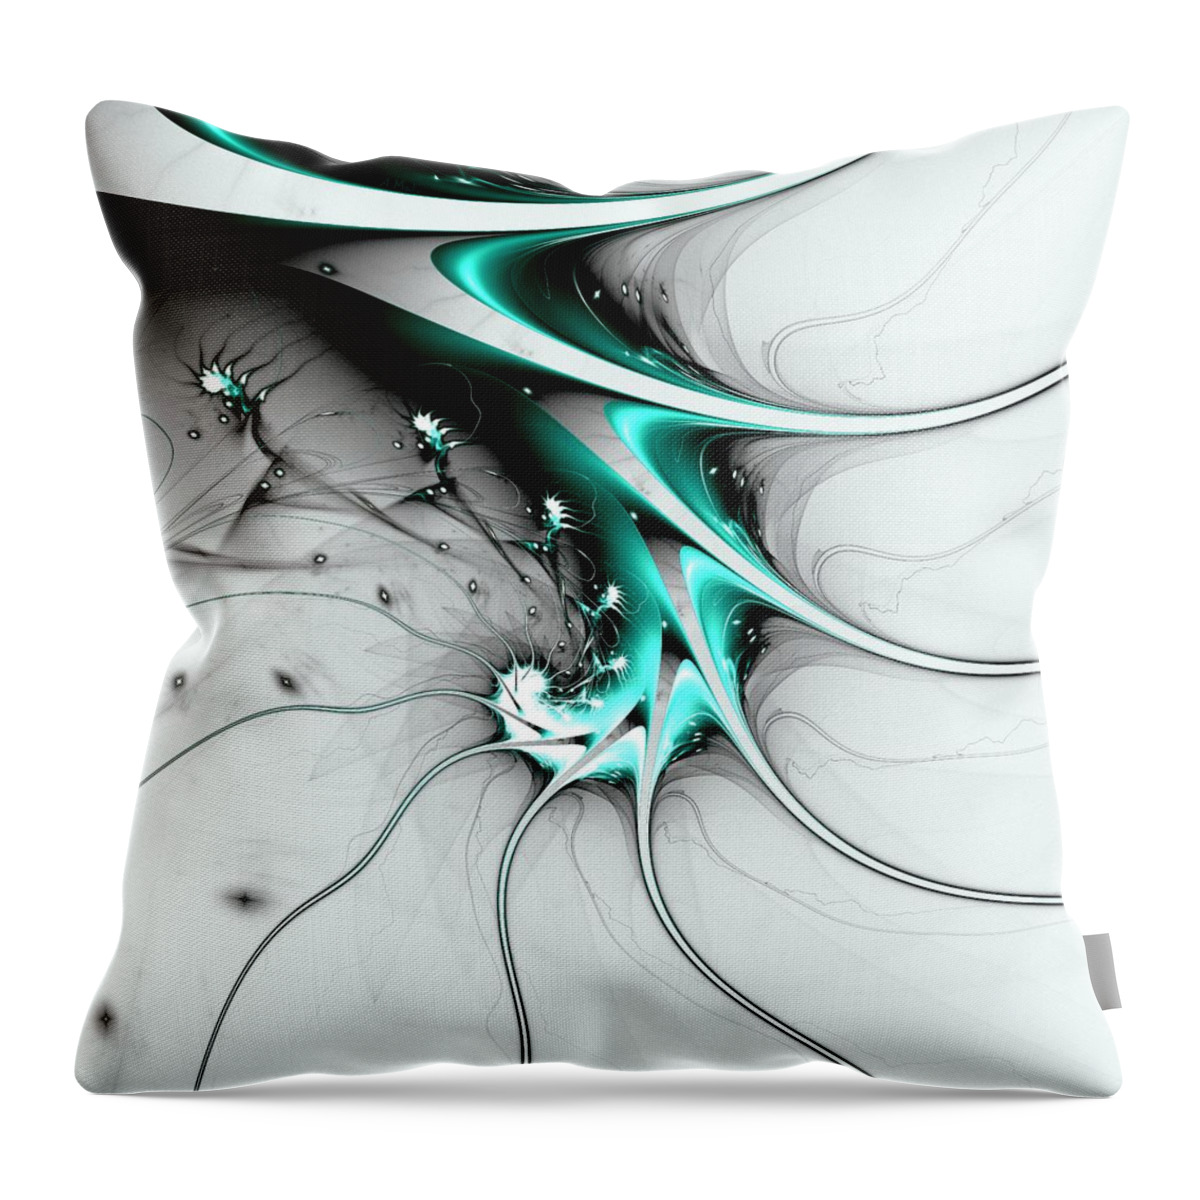 Entity Throw Pillow featuring the digital art Entity by Anastasiya Malakhova